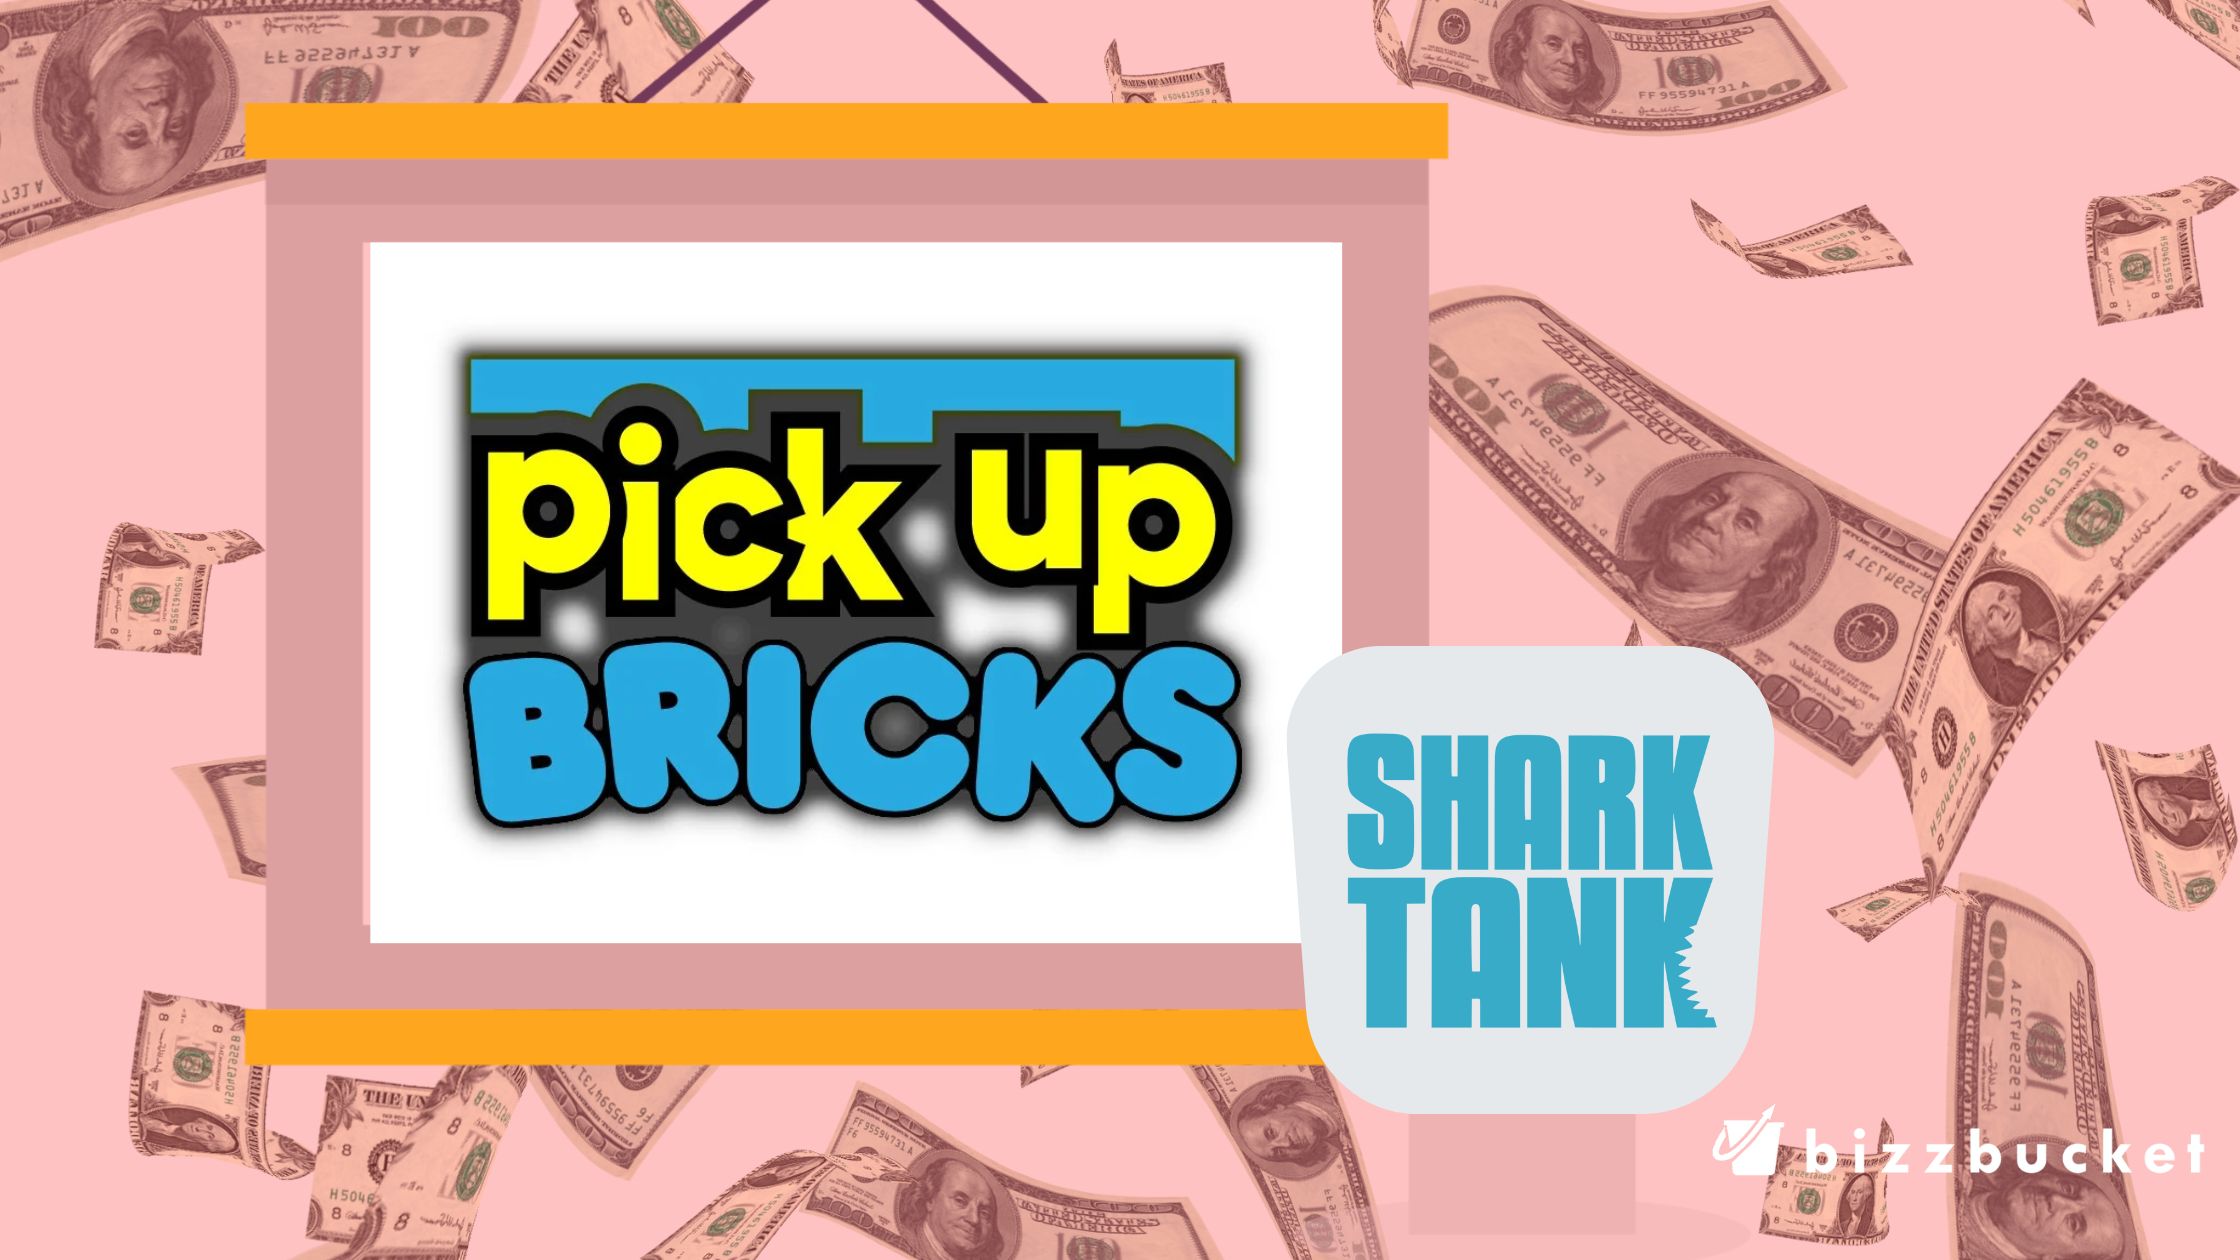 Pick Up Bricks shark tank